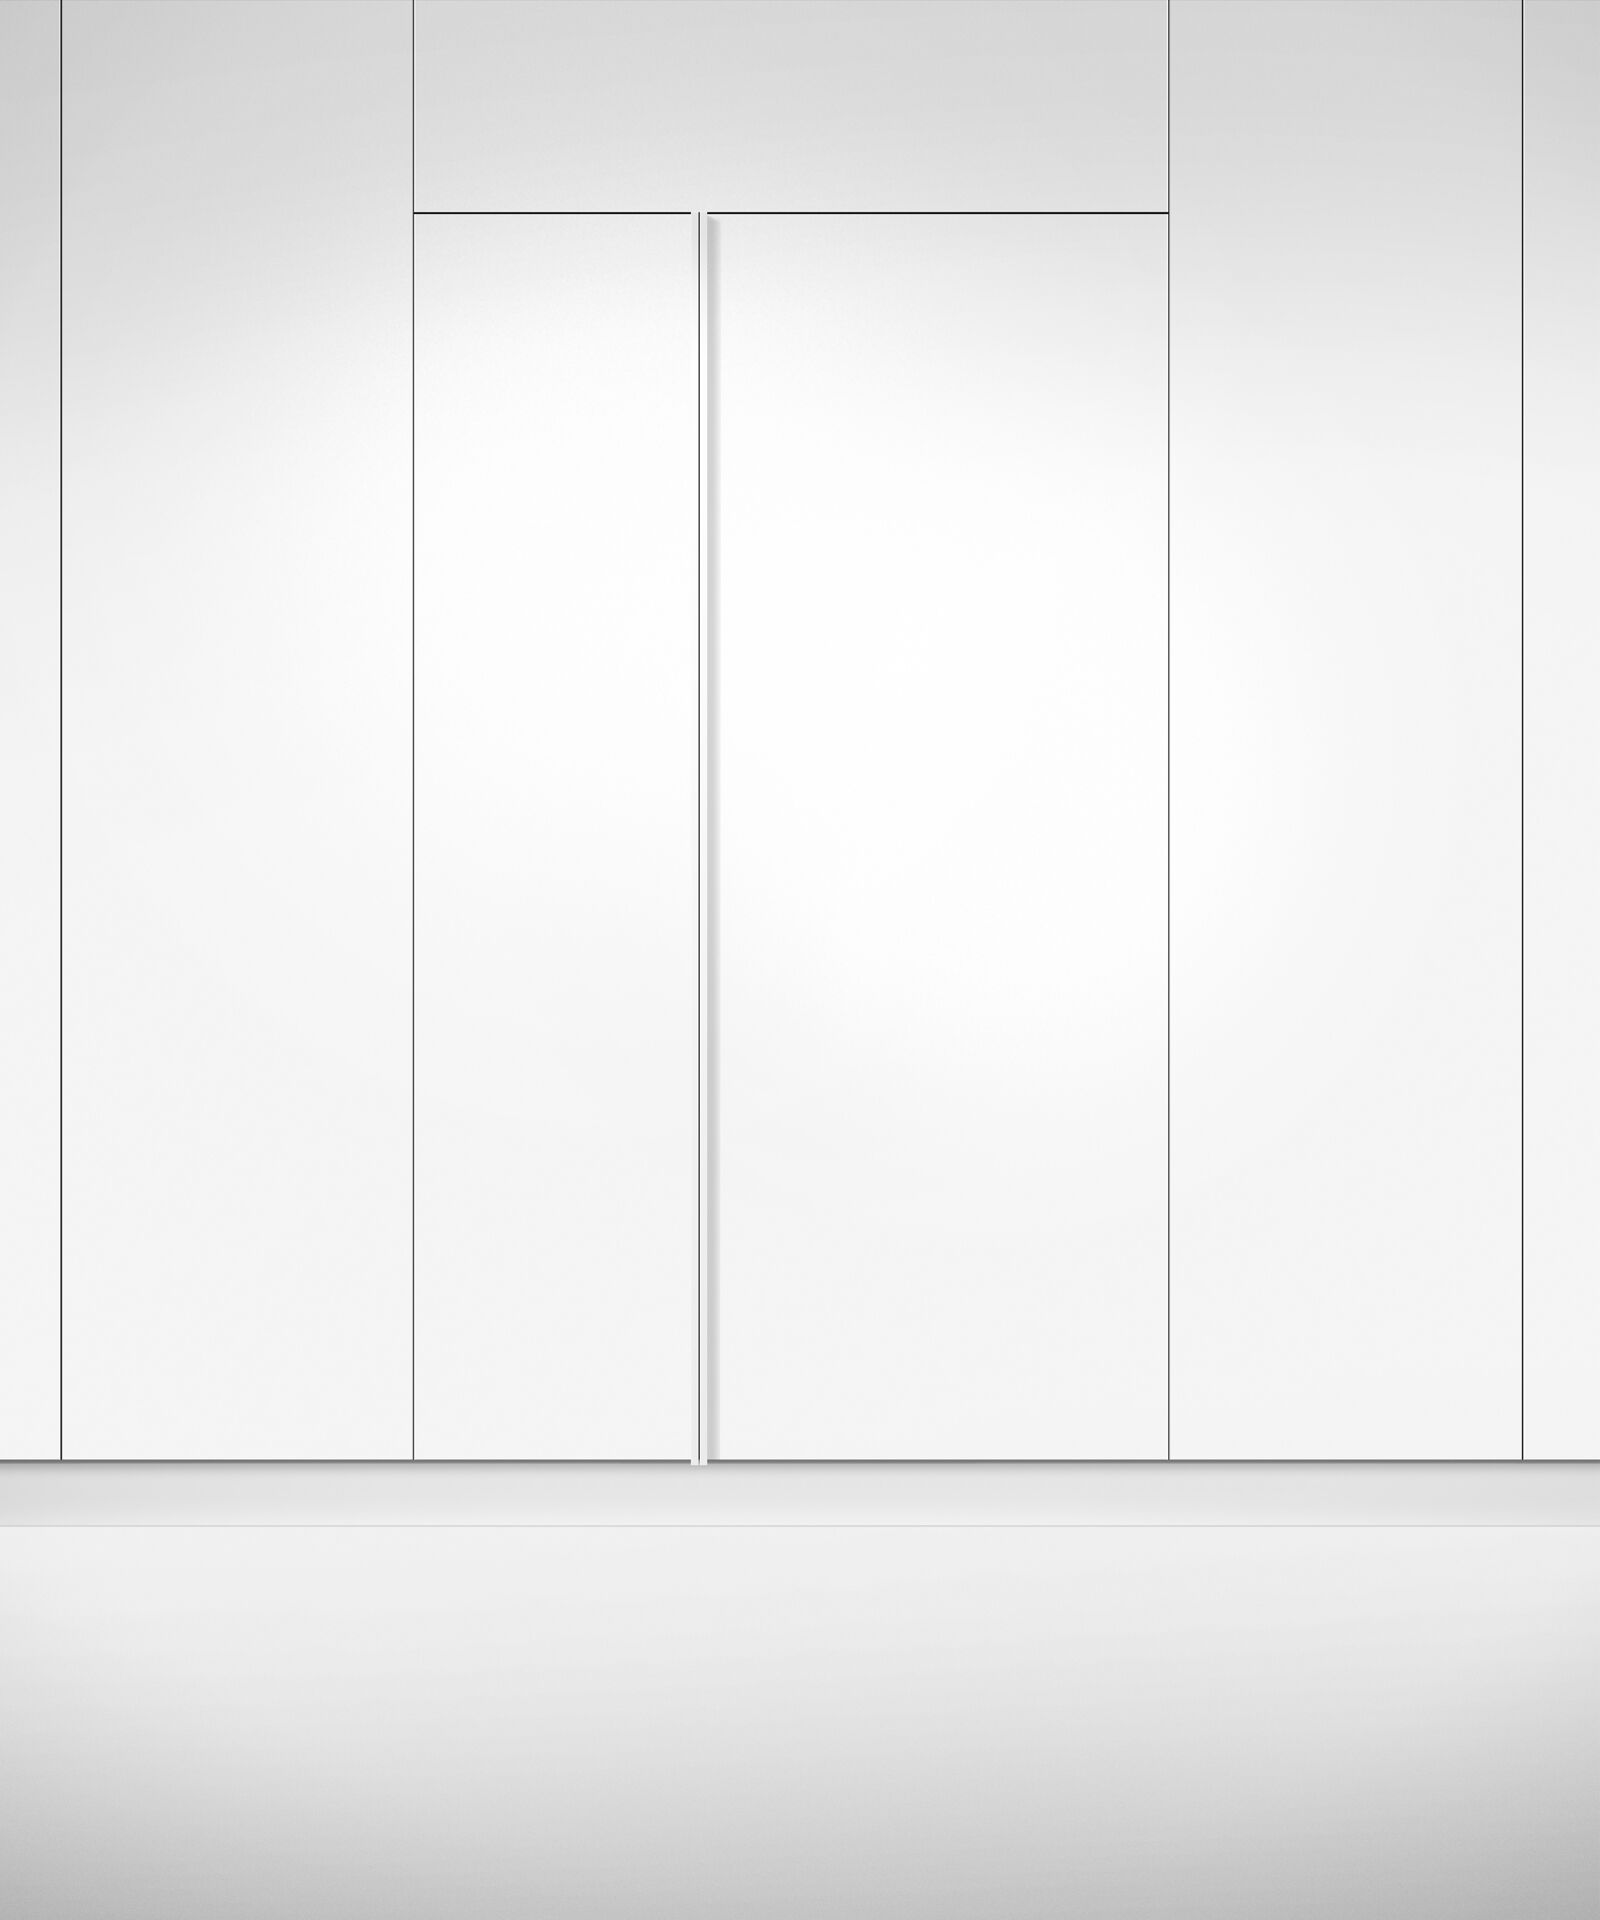 Integrated Column Refrigerator, 76cm gallery image 7.0